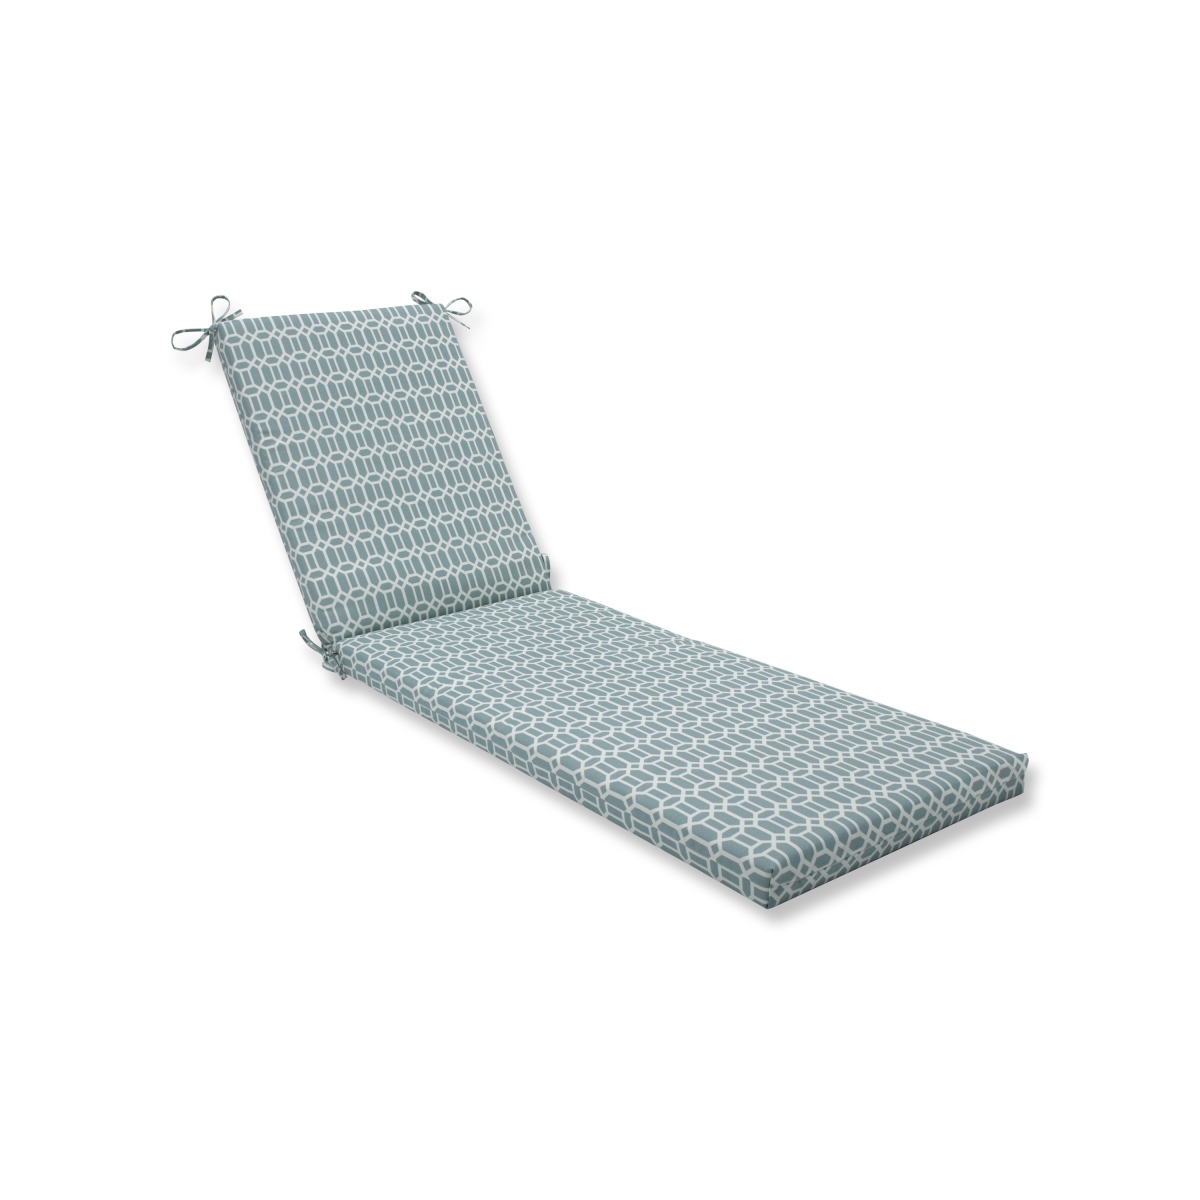 80 X 23 X 3 In. Outdoor & Indoor Rhodes Quartz Chaise Lounge Cushion, Blue